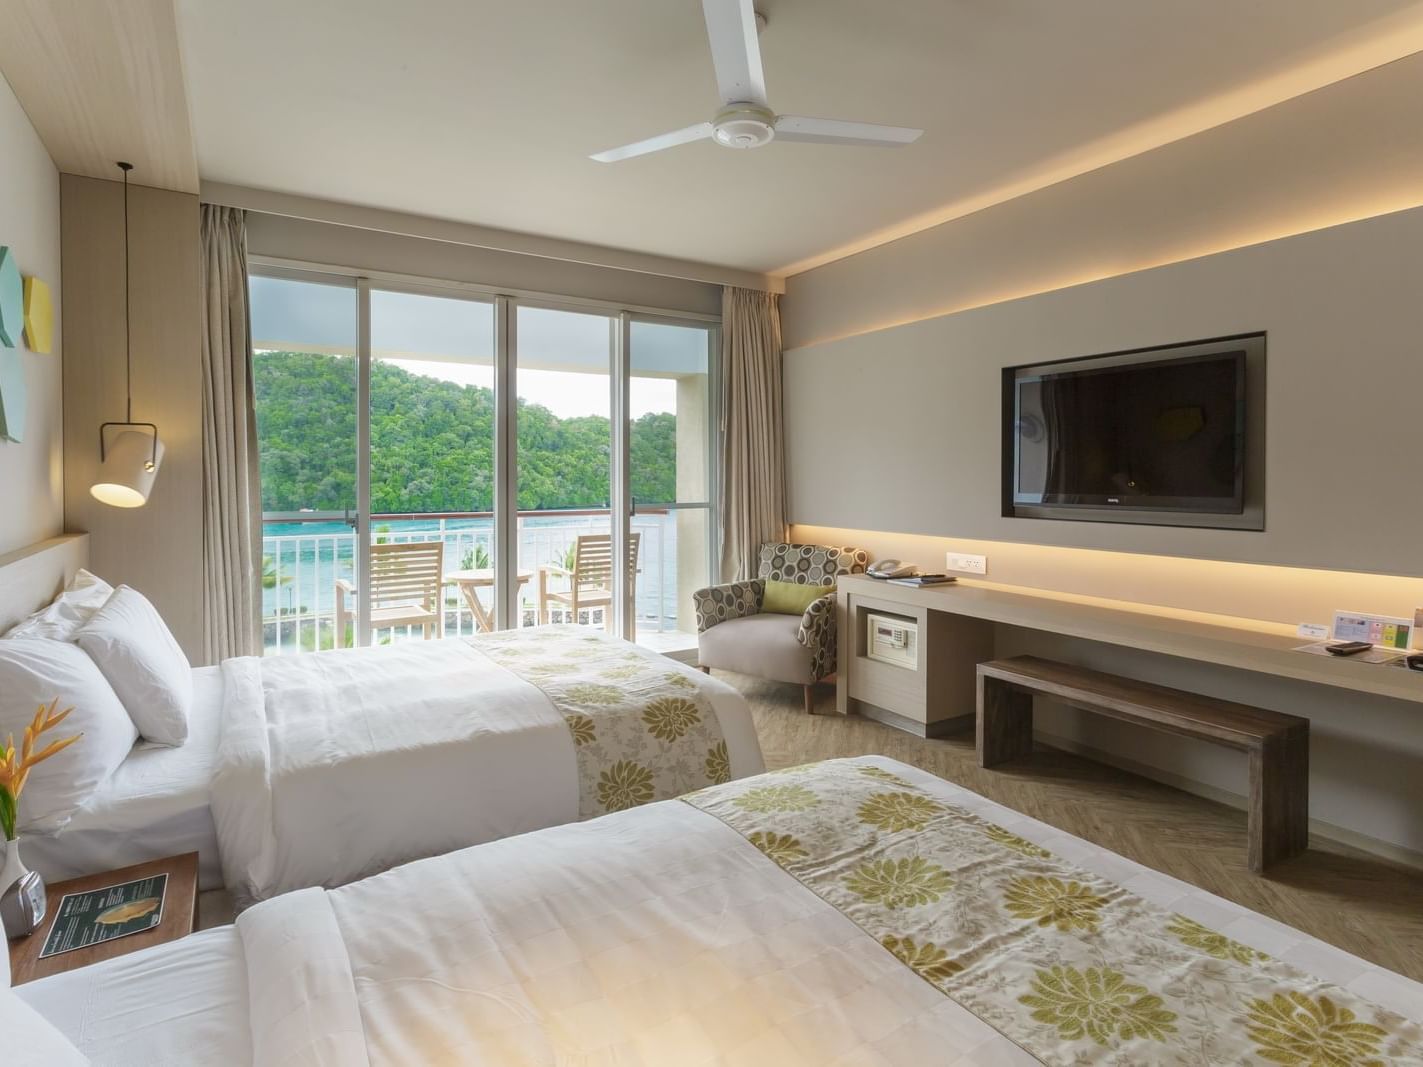 Interior of Deluxe Ocean View bedroom at Palau Royal Resort